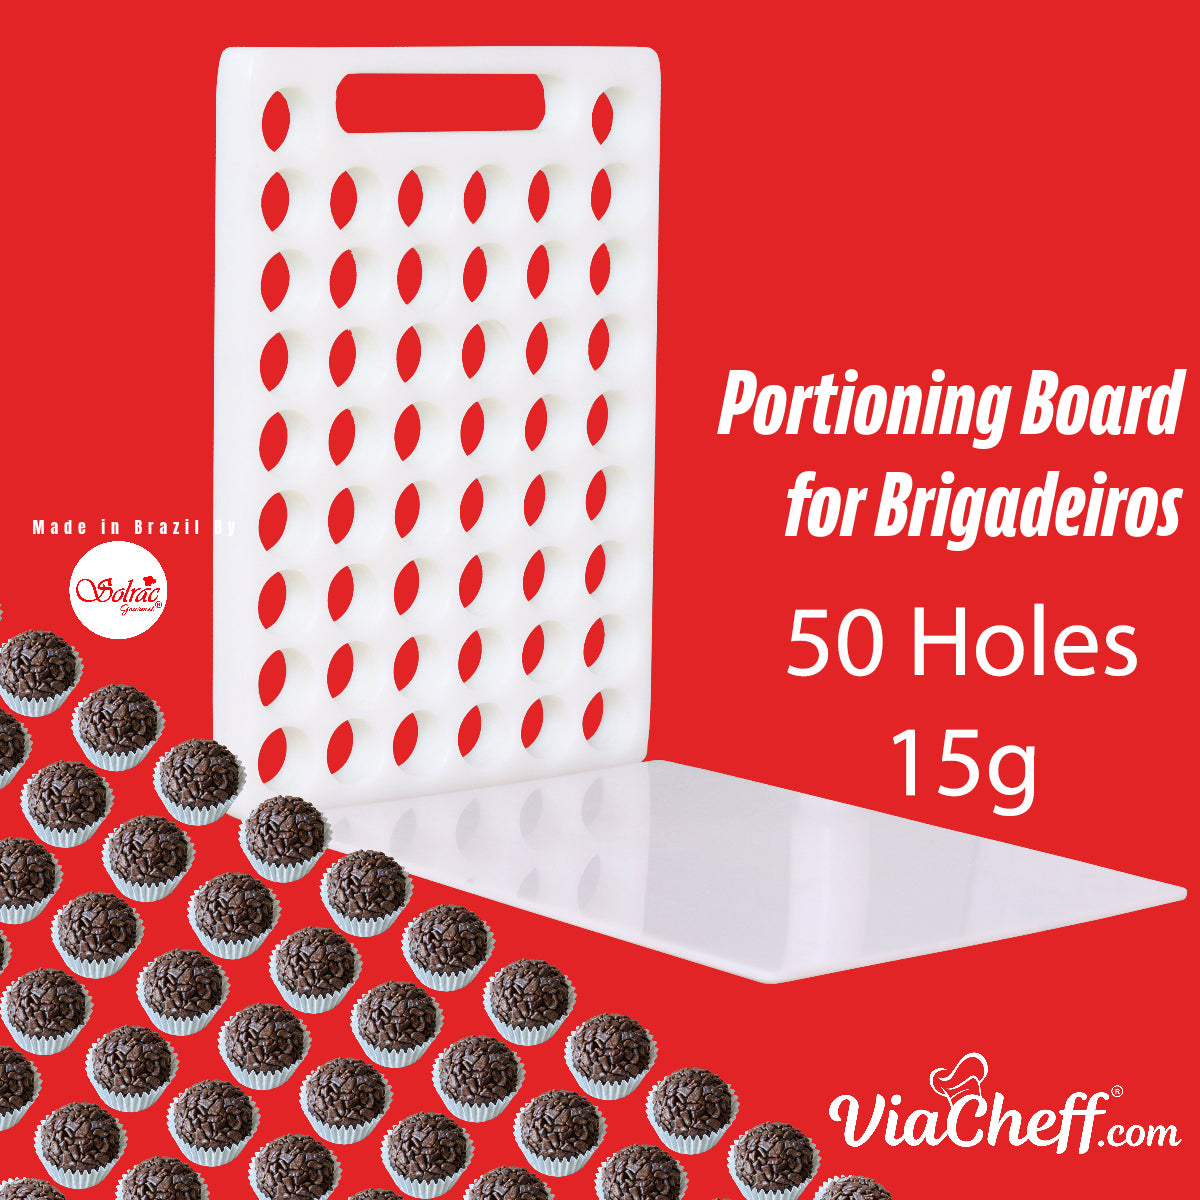 Portioning Board for 15g Brigadeiros (50 Holes)